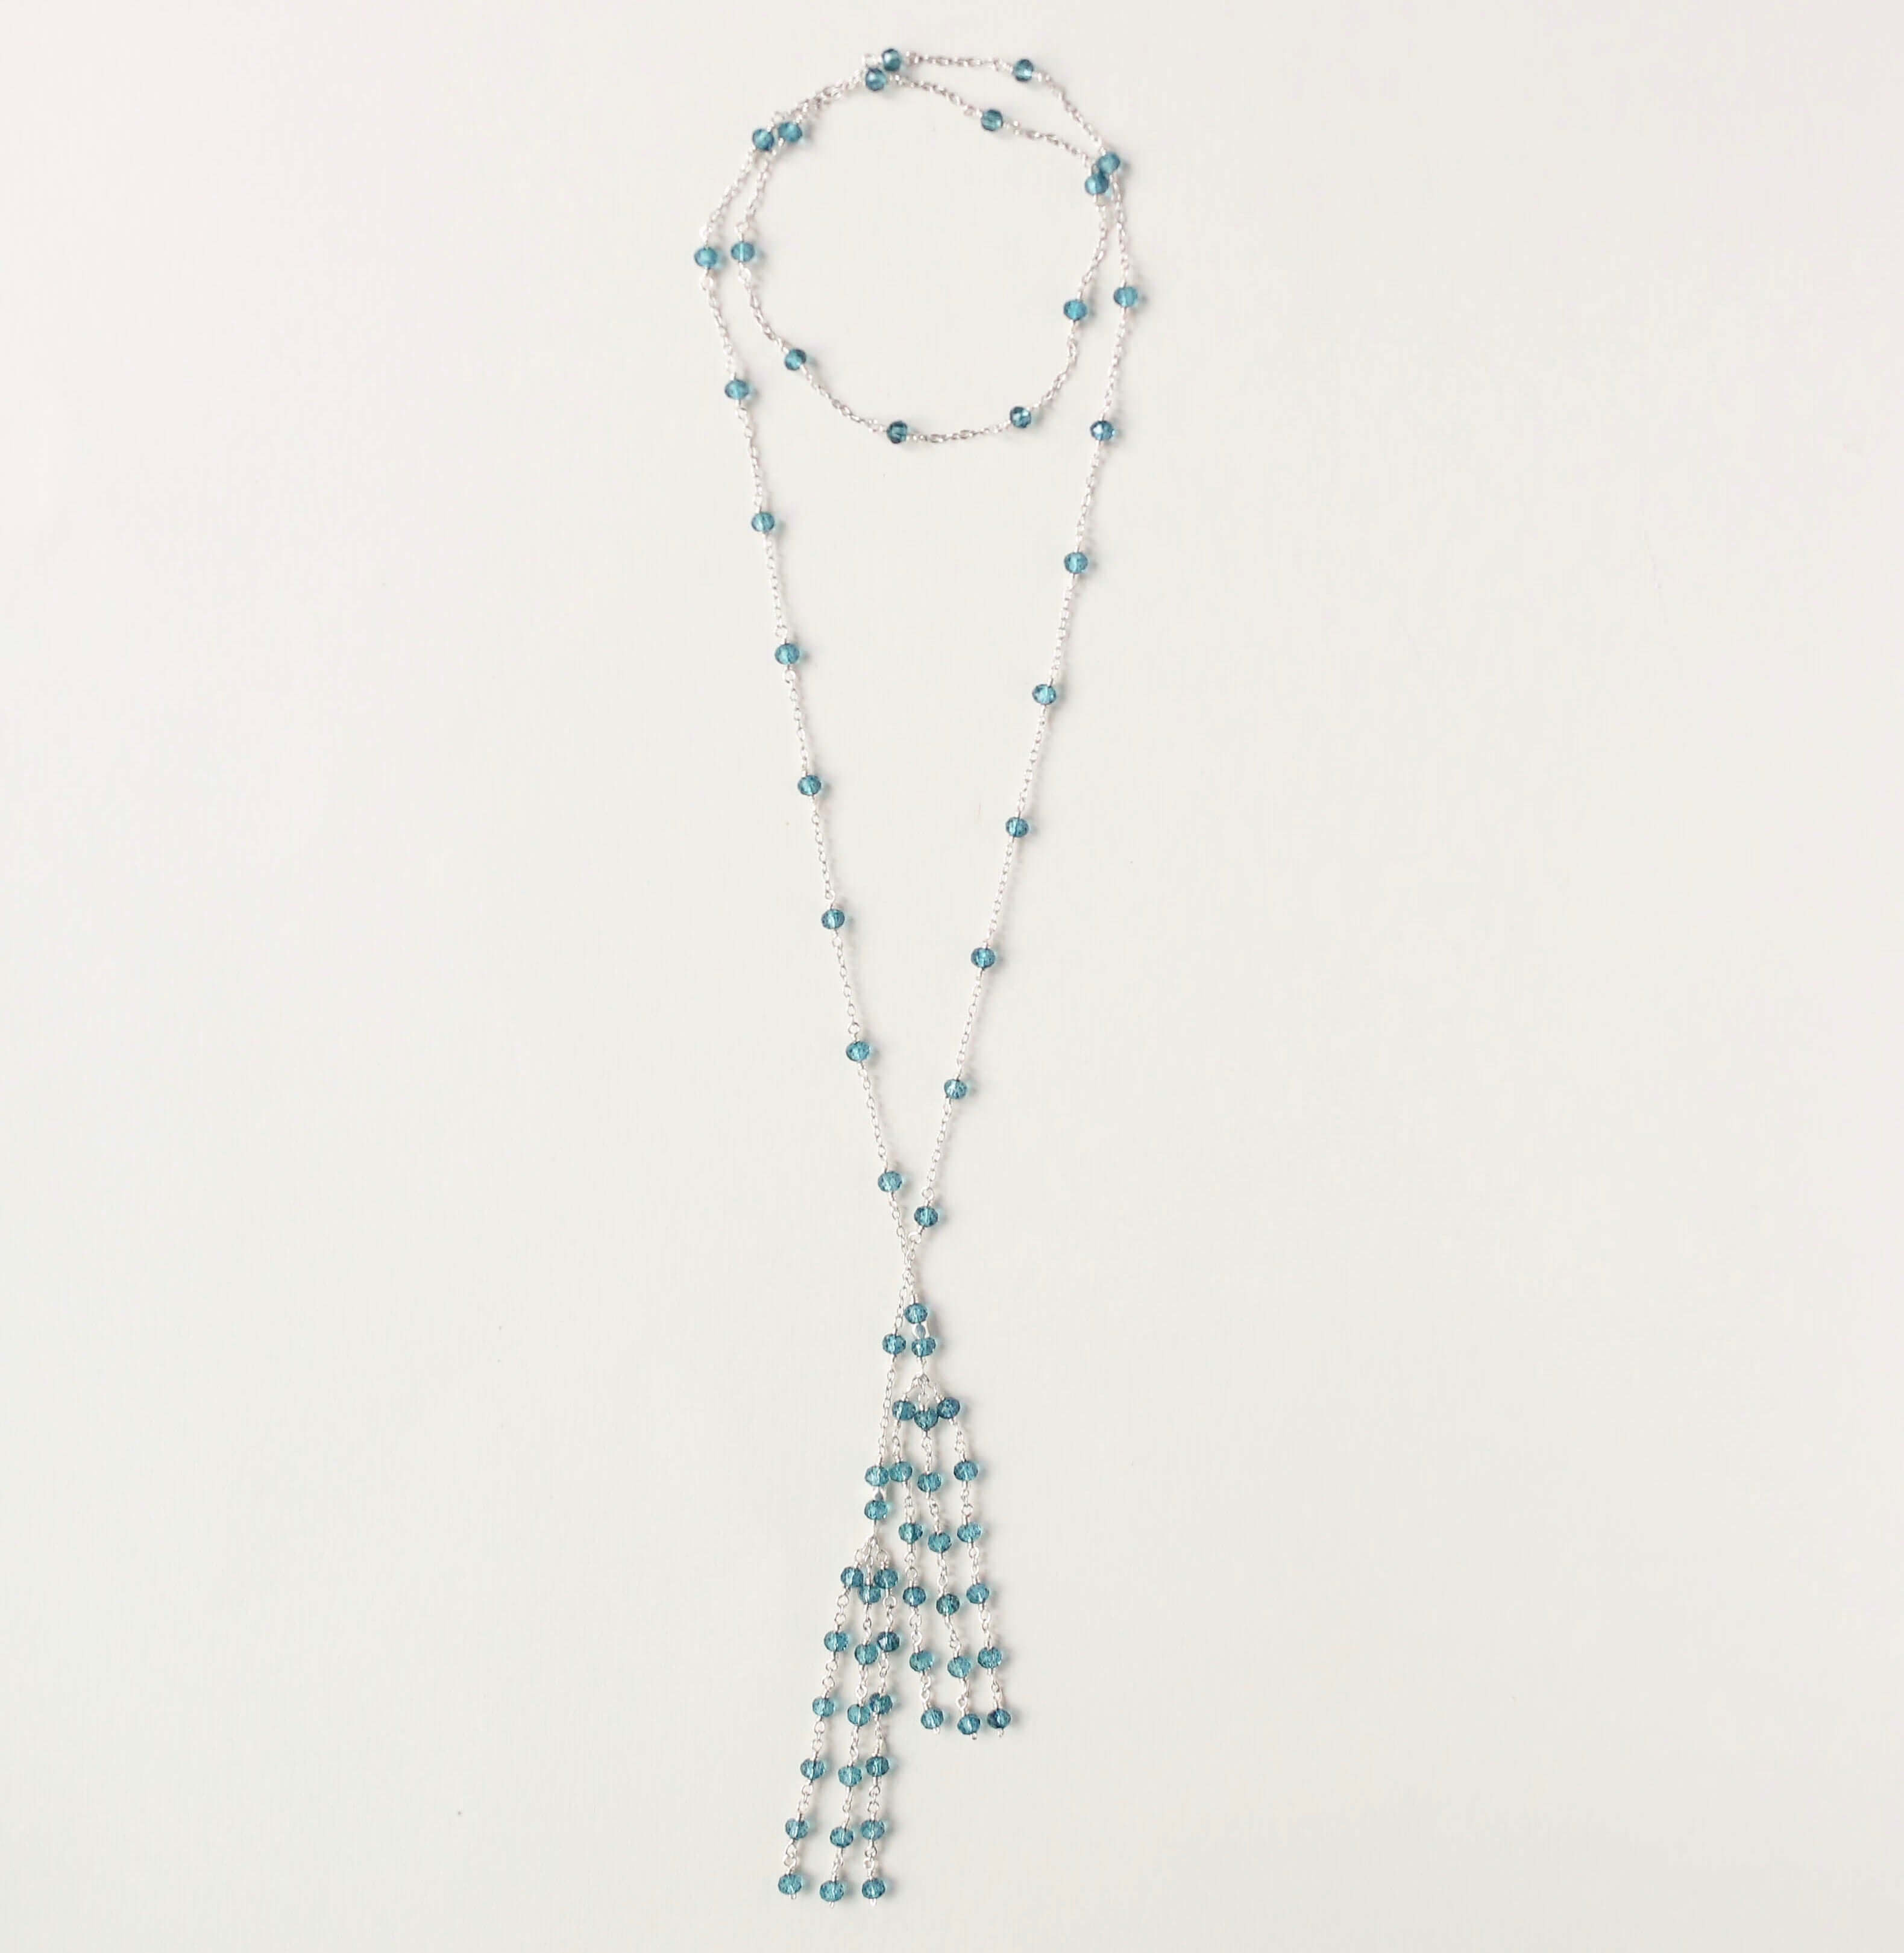 Rhodium plated London Blue Quartz Lariat Necklace with a stunning tassel